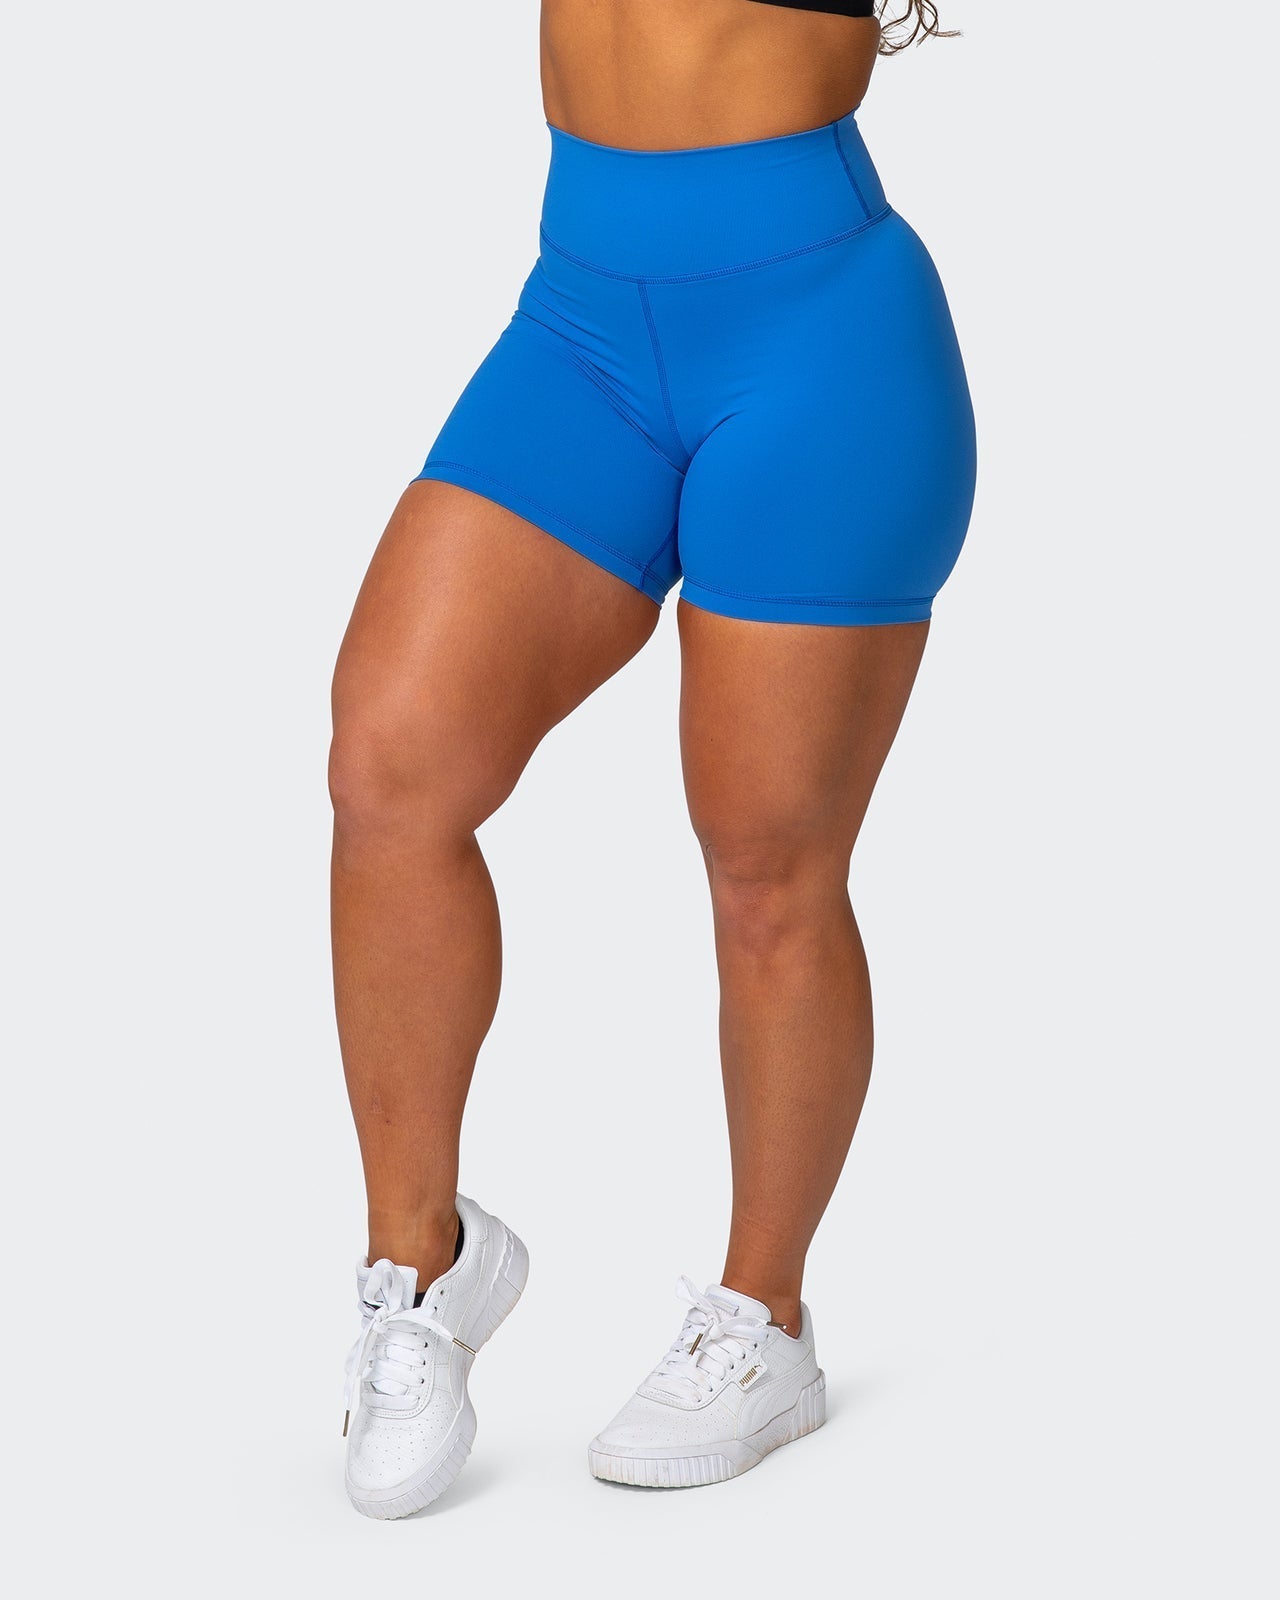 musclenation Shorts Signature Scrunch Bike Shorts - Sonic Blue